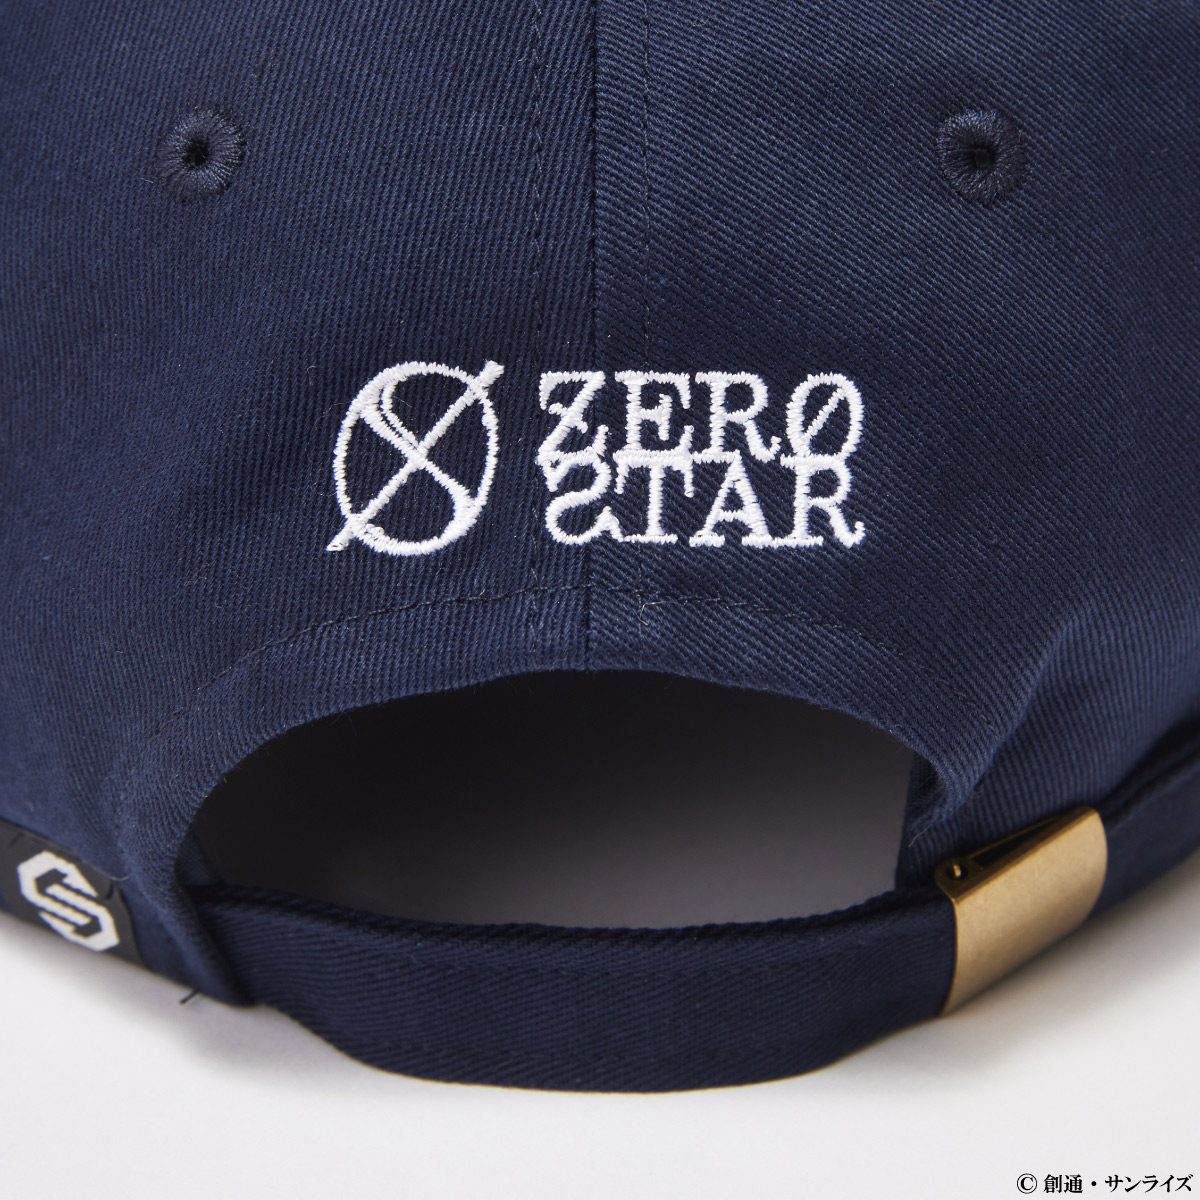 STRICT-G ZERO STAR "Mobile Suit Gundam" CAP WHITE BASE